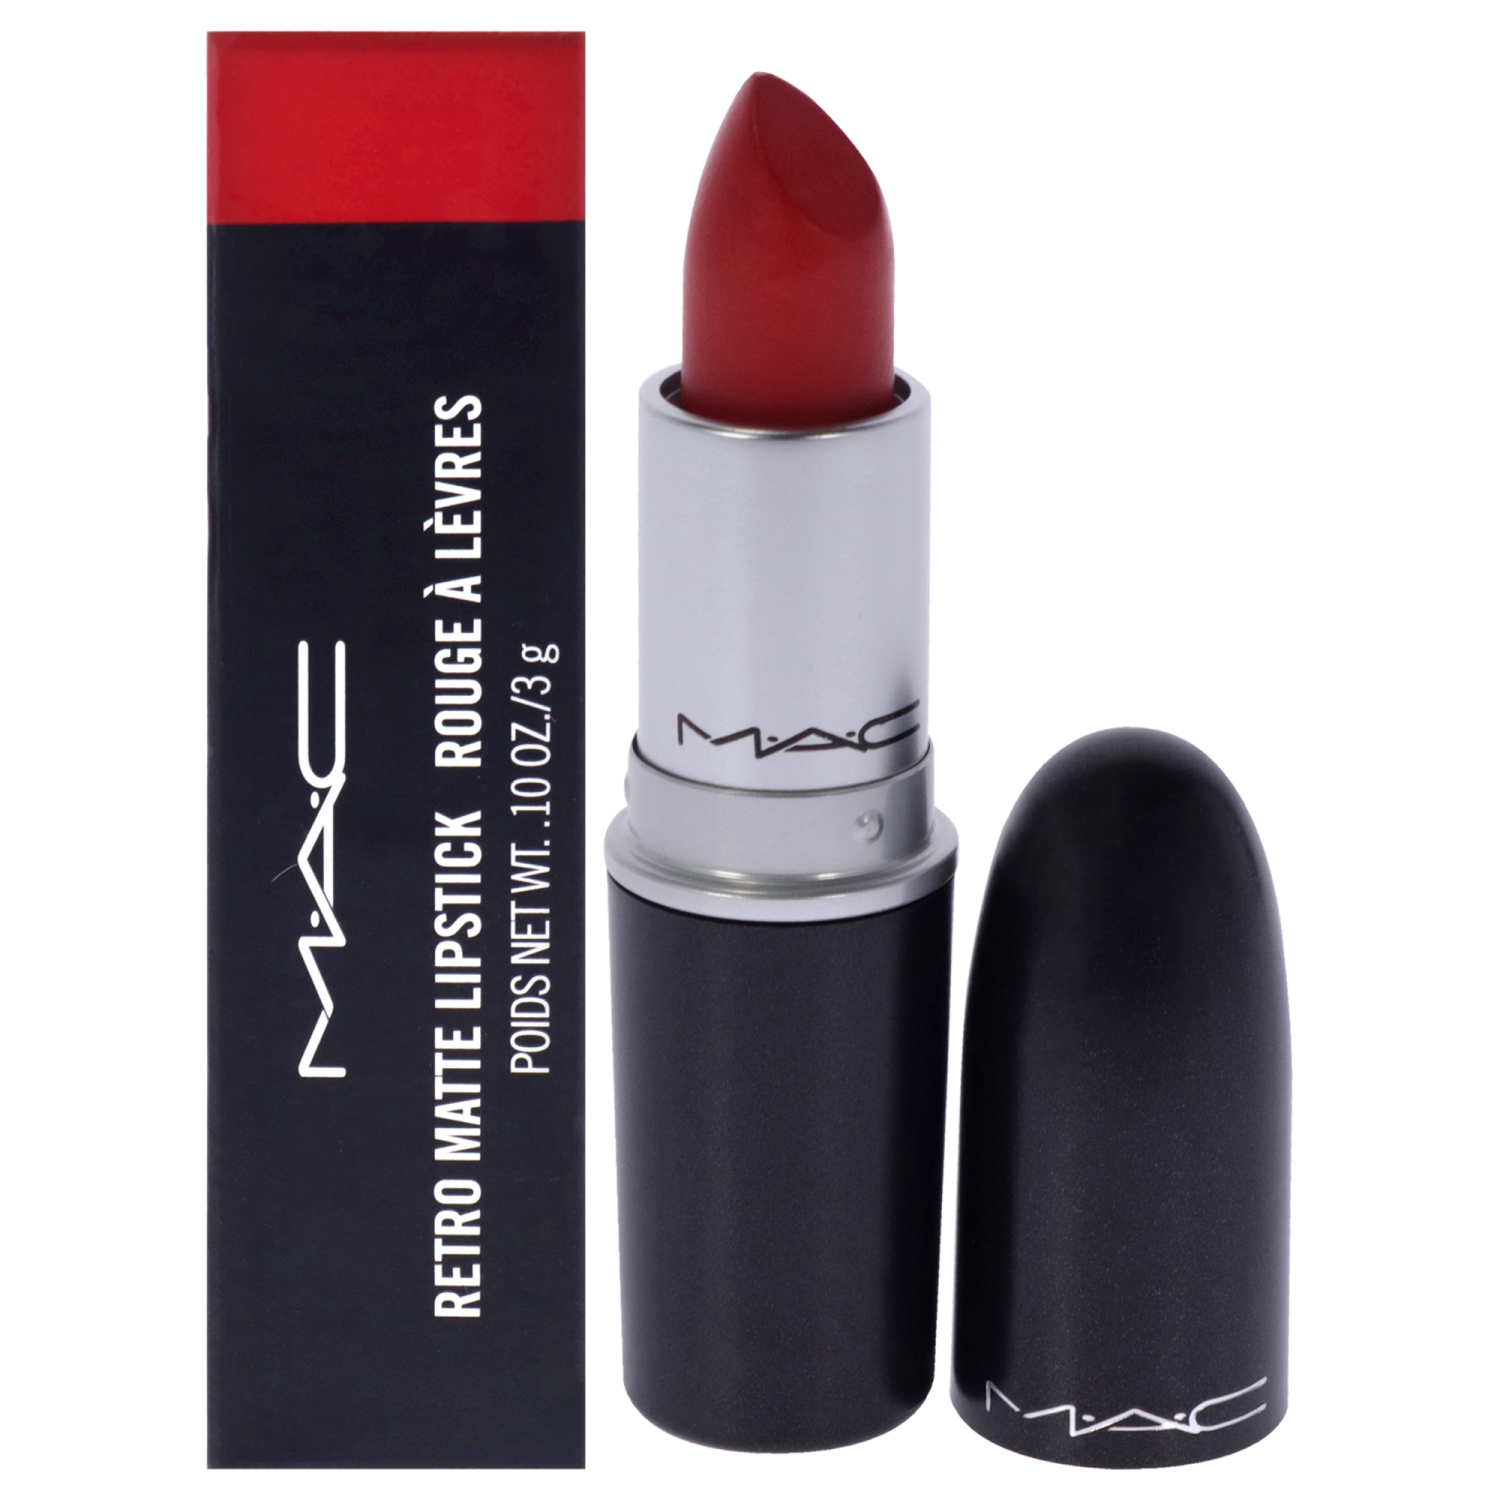 Retro Matte Lipstick - 702 Dangerous by MAC for Women - 0.1 oz Lipstick